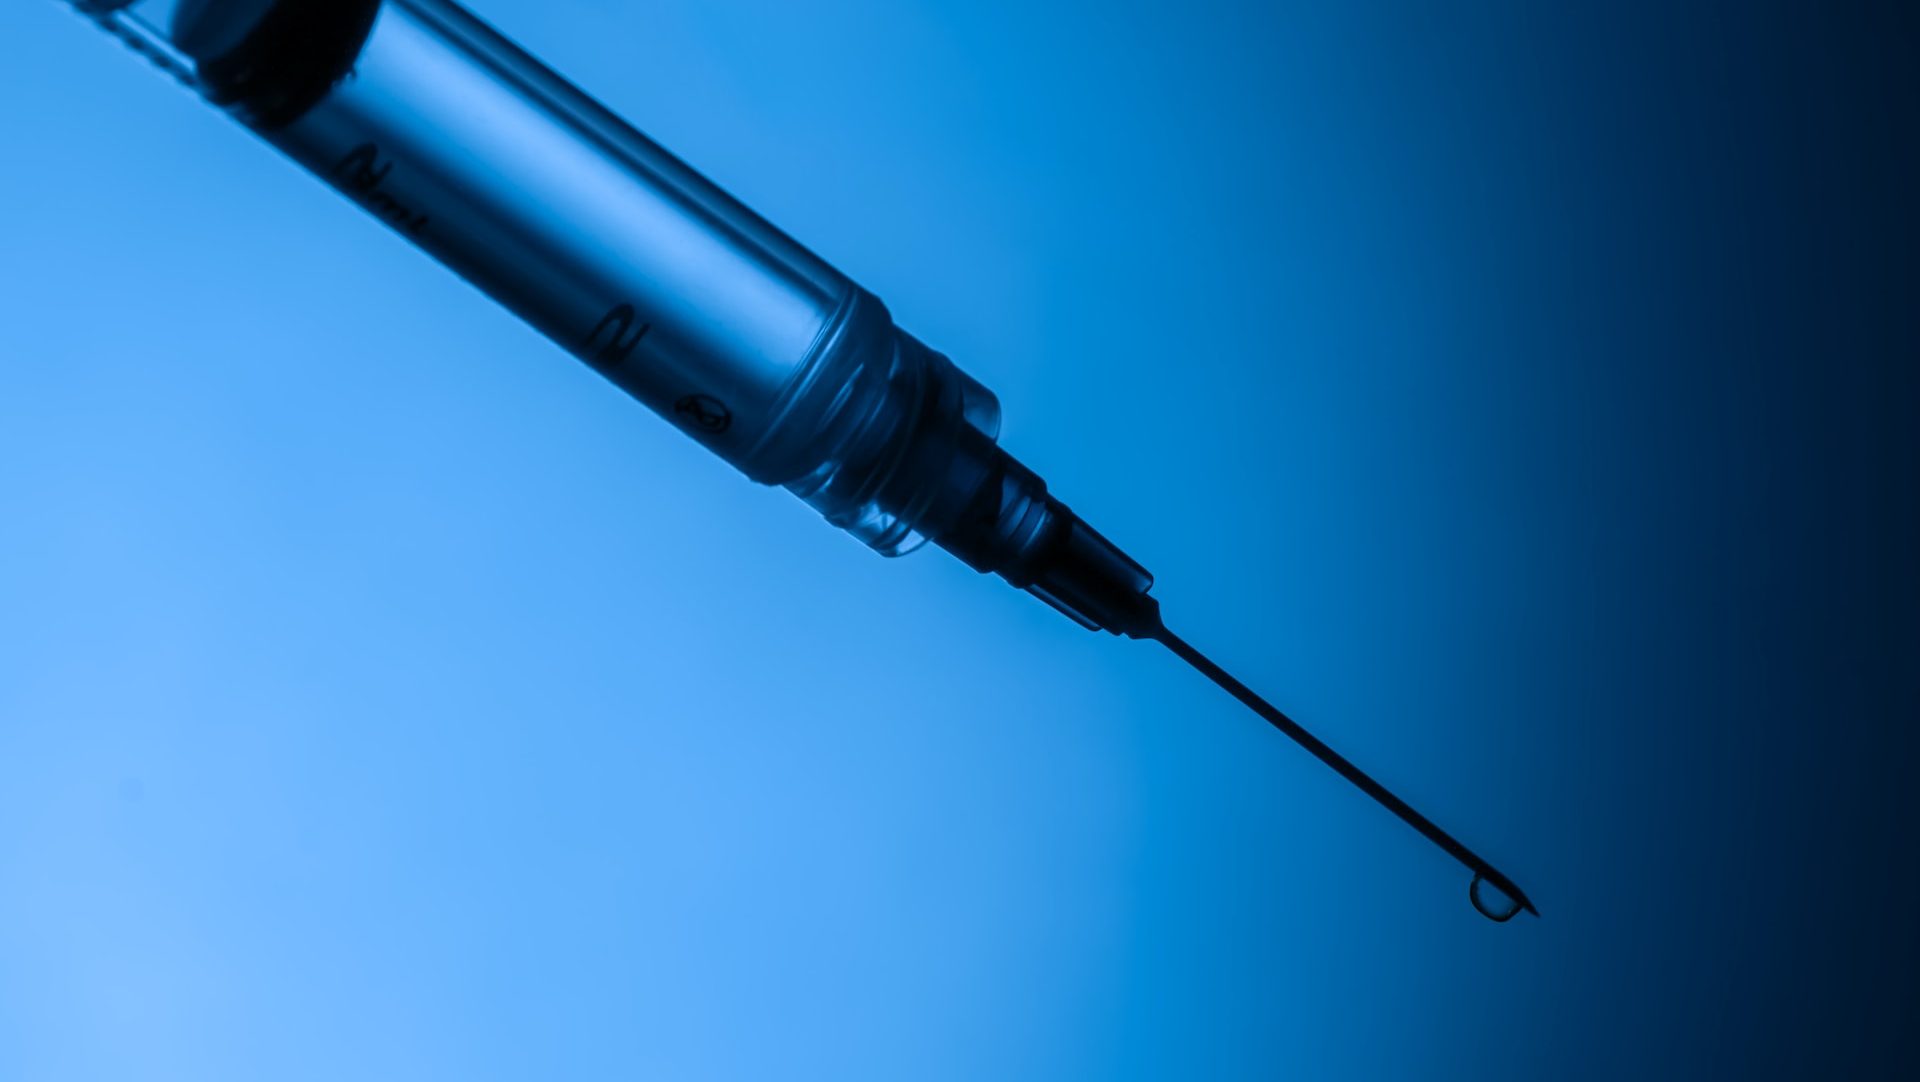 a close-up of a syringe